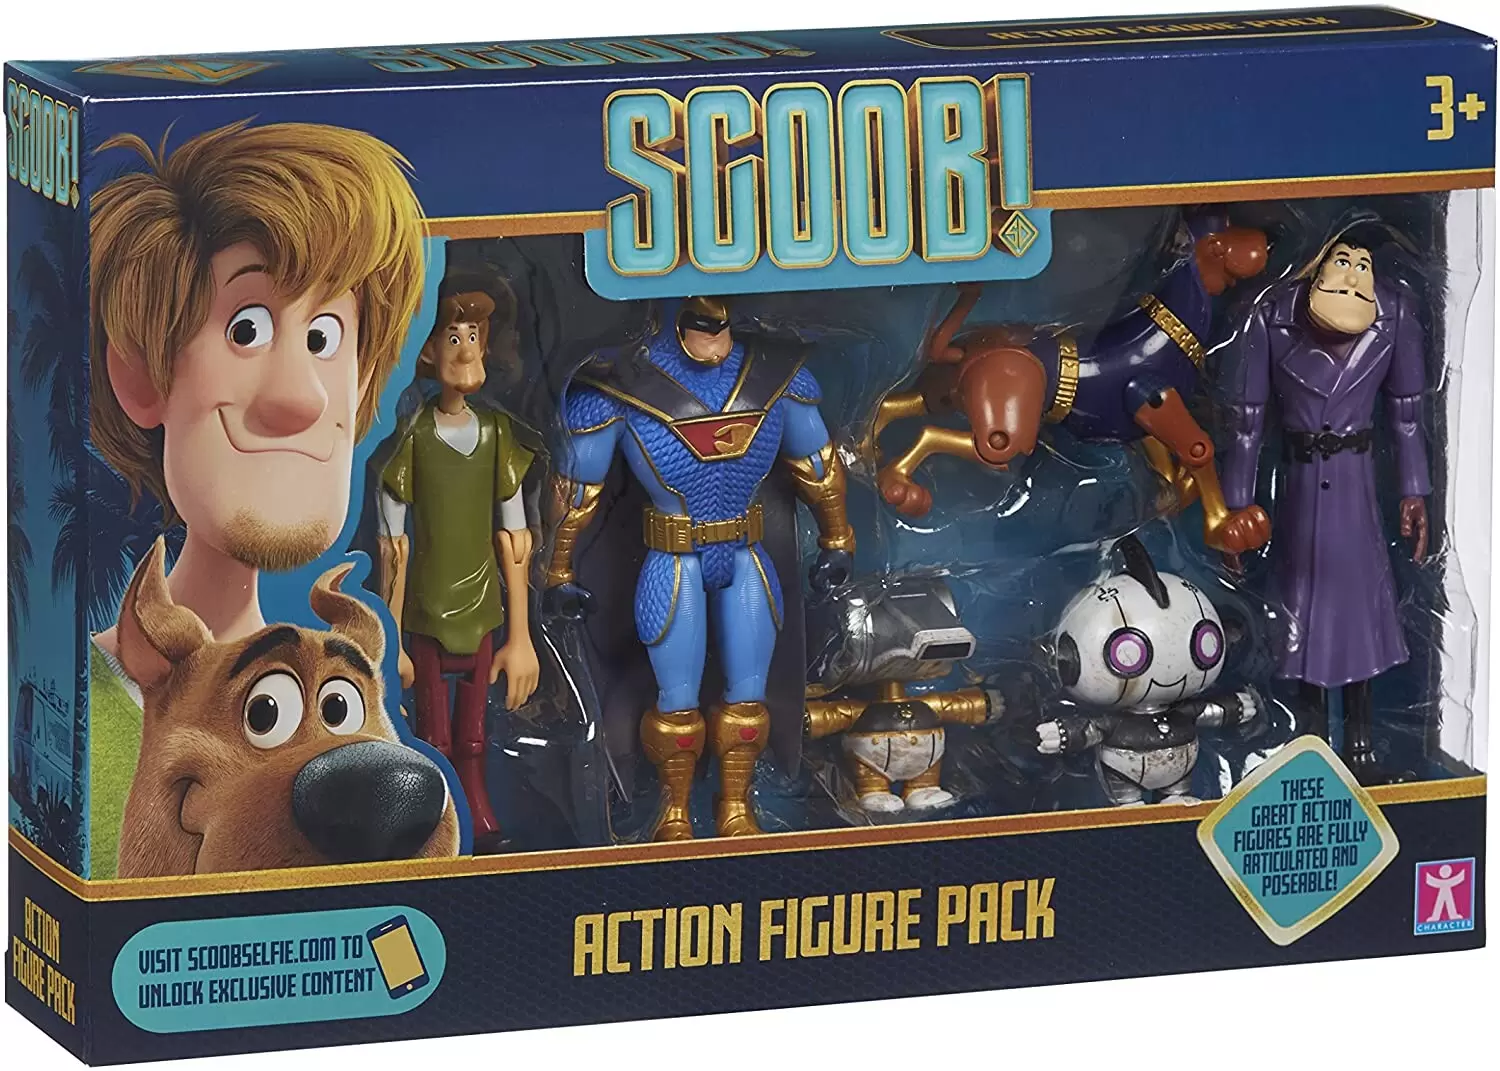 Scoob! Action Figures - Action Figure Pack